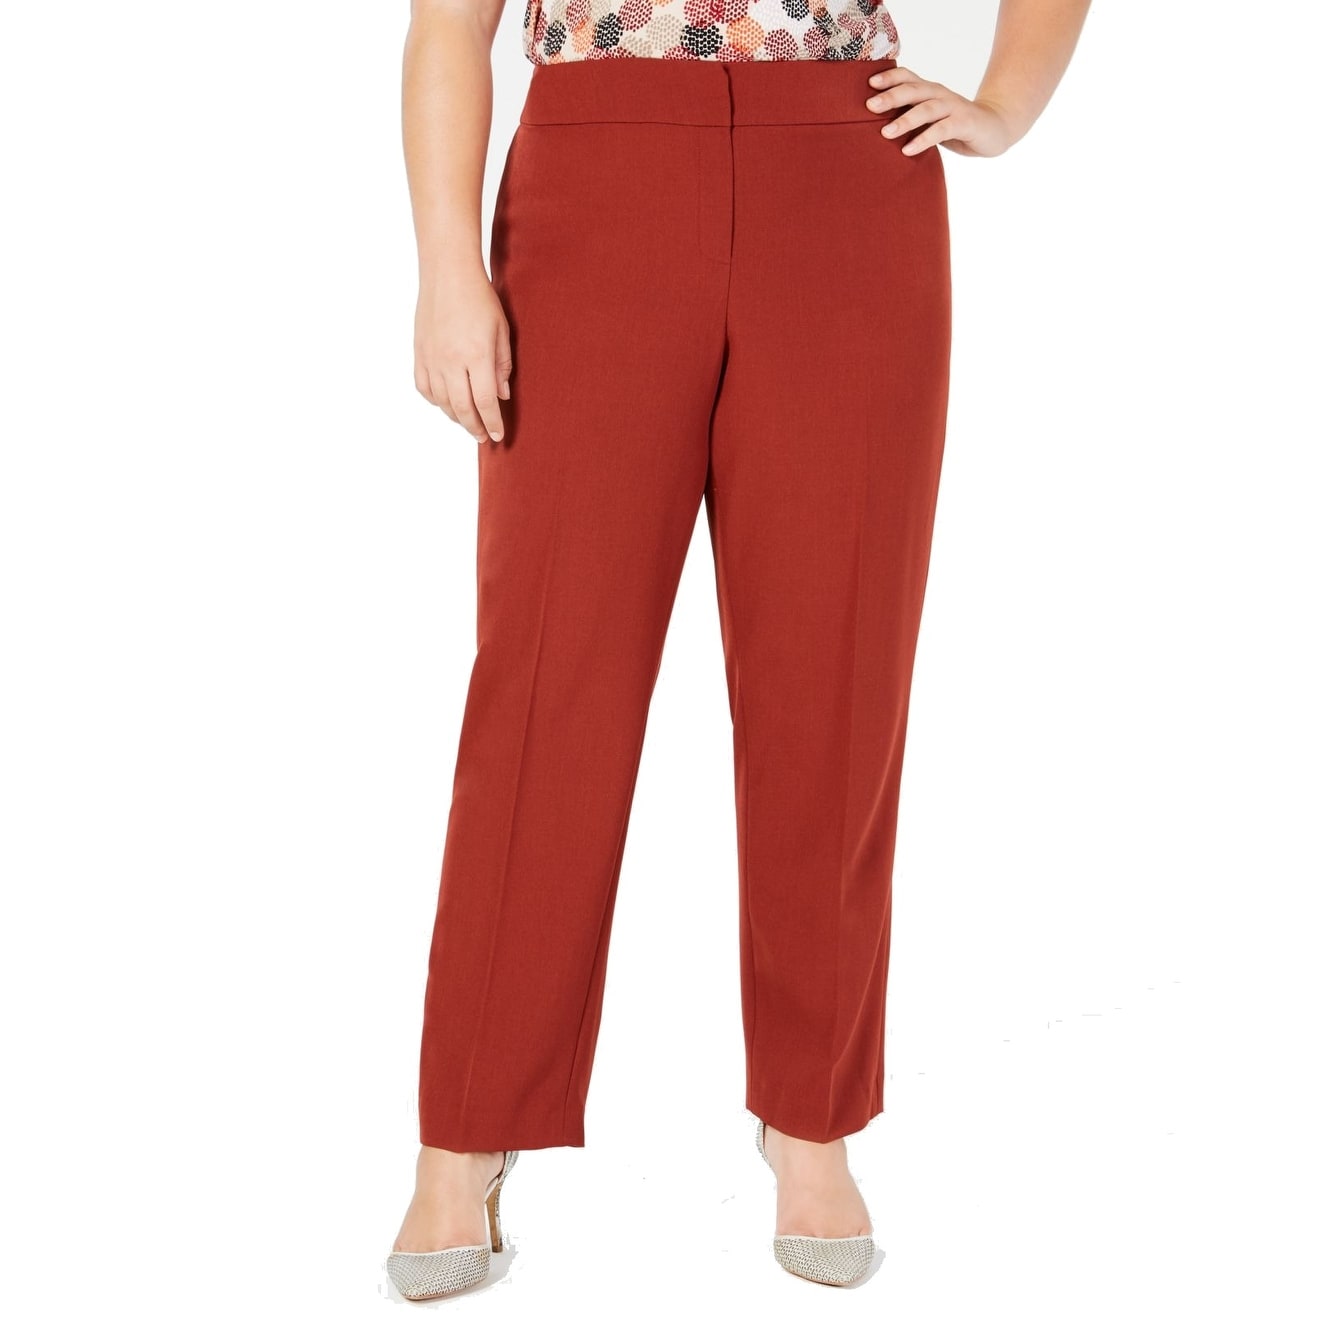 Kasper Womens Dress Pants Russet Red Size 24W Plus Flat-Front Stretch